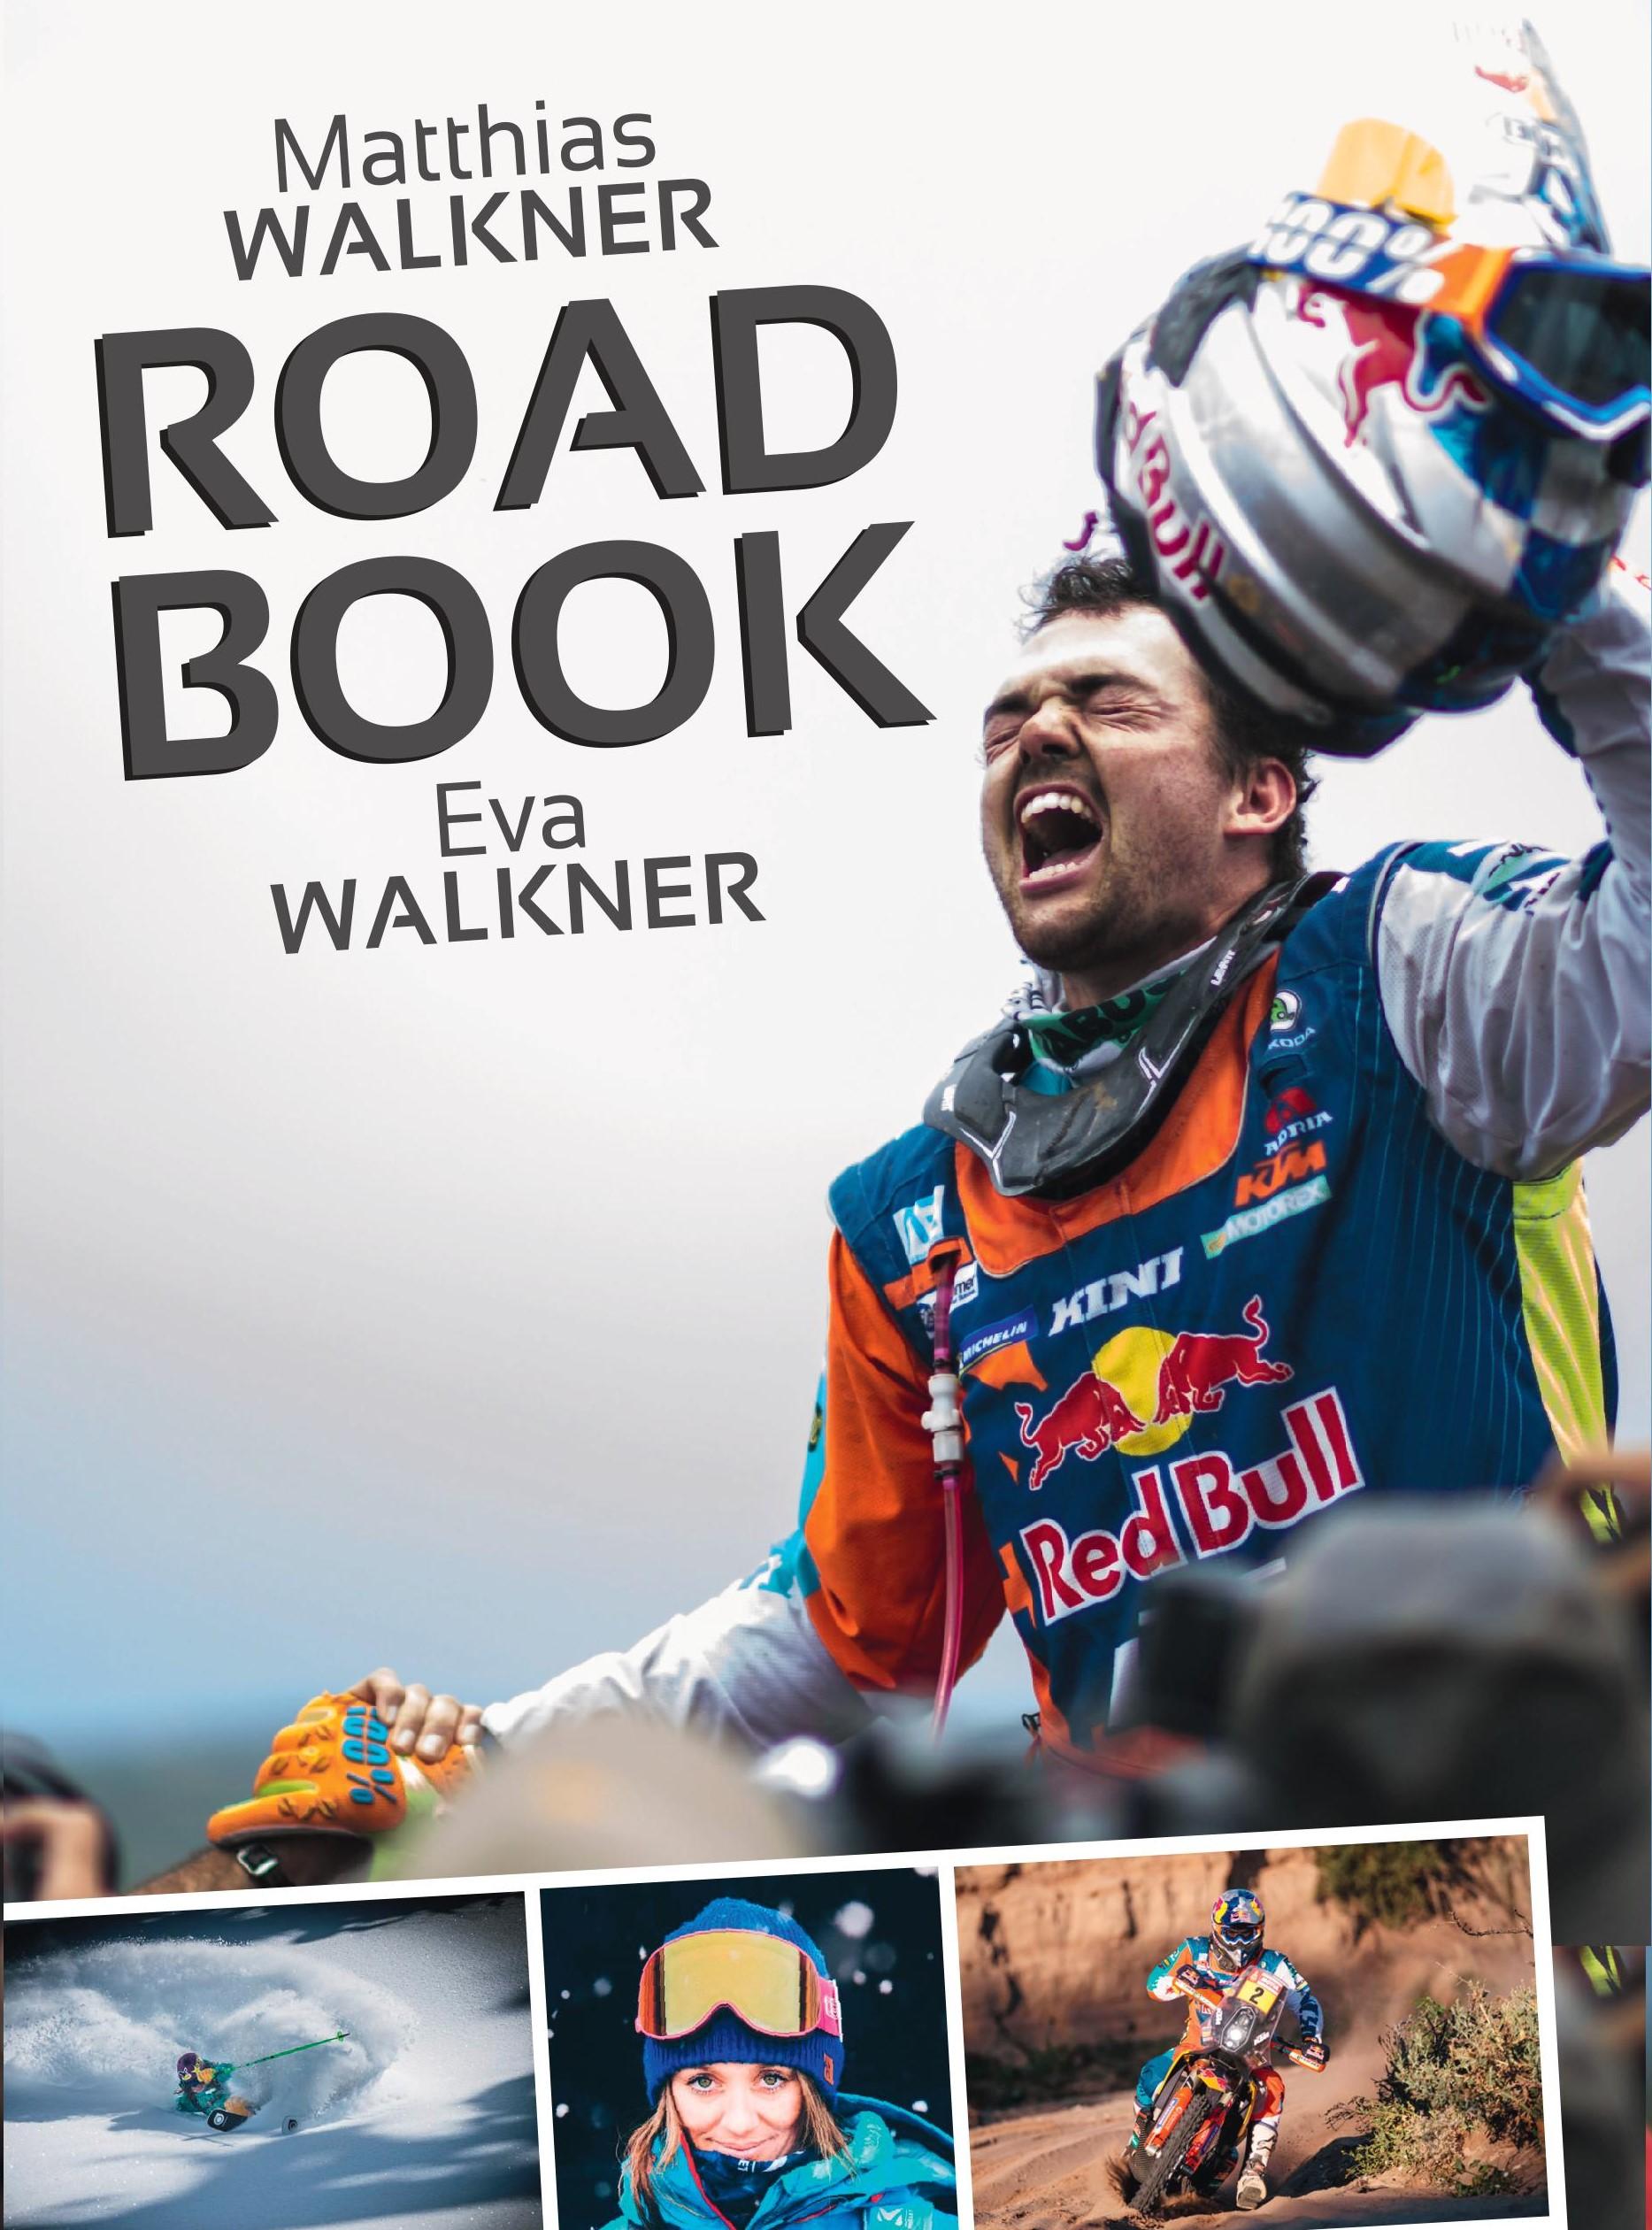 Roadbook - Matthias Walkner|Eva Walkner|Egon Theiner